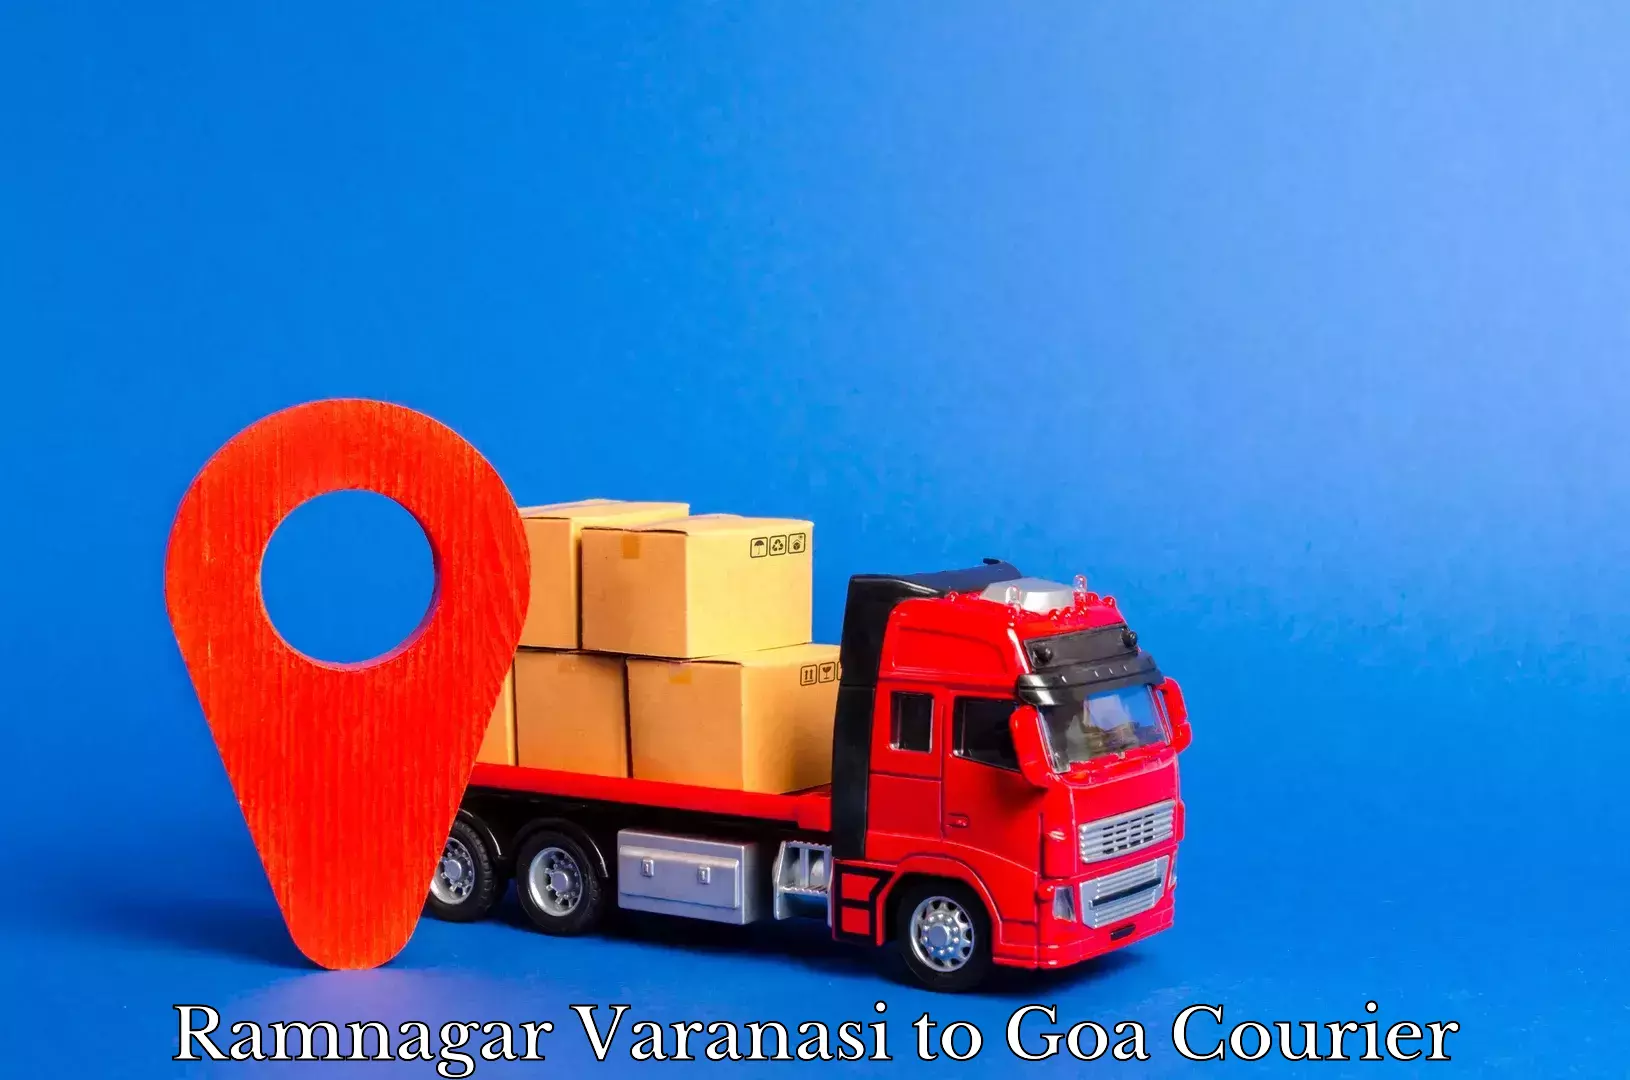 Domestic courier Ramnagar Varanasi to Goa